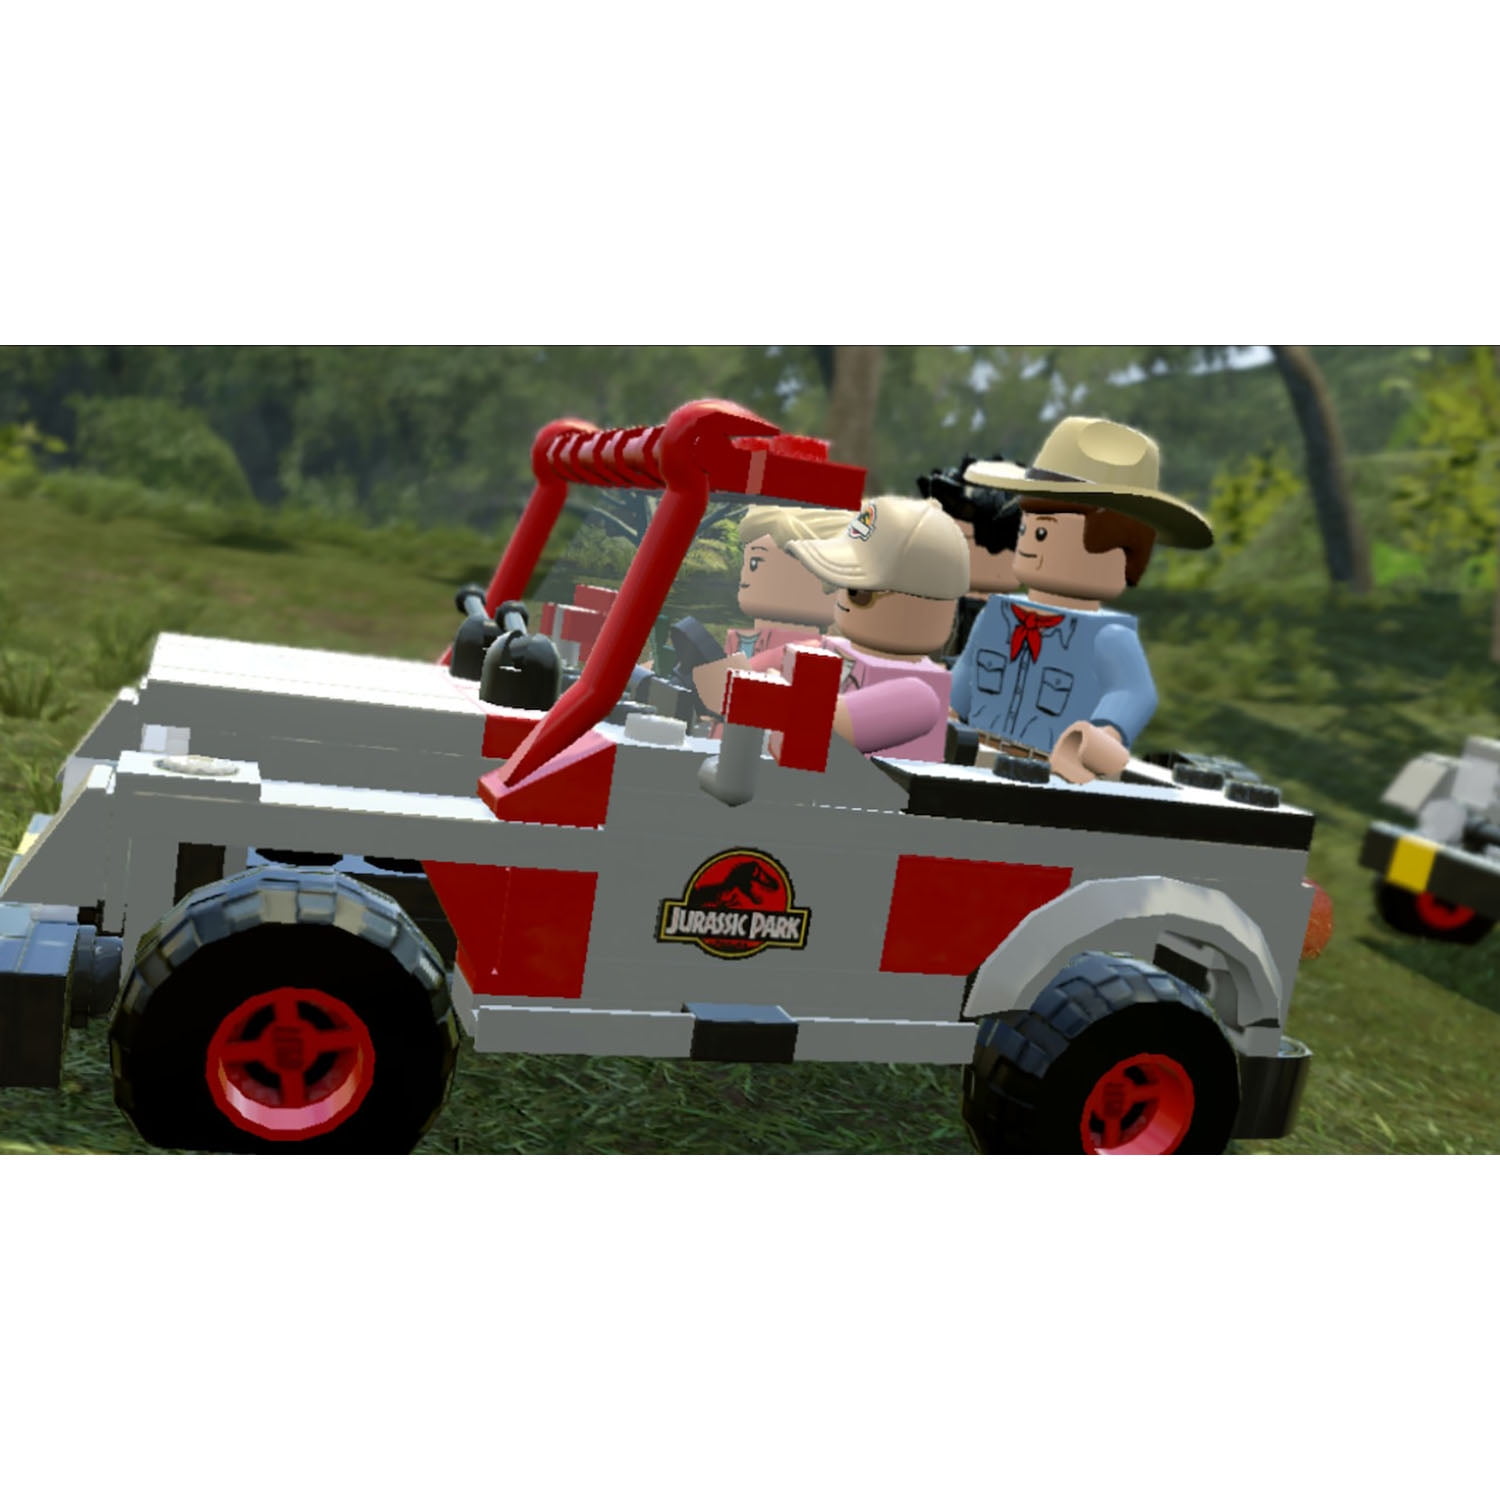 LEGO Jurassic World (SWITCH) pas cher - Prix 9,97€